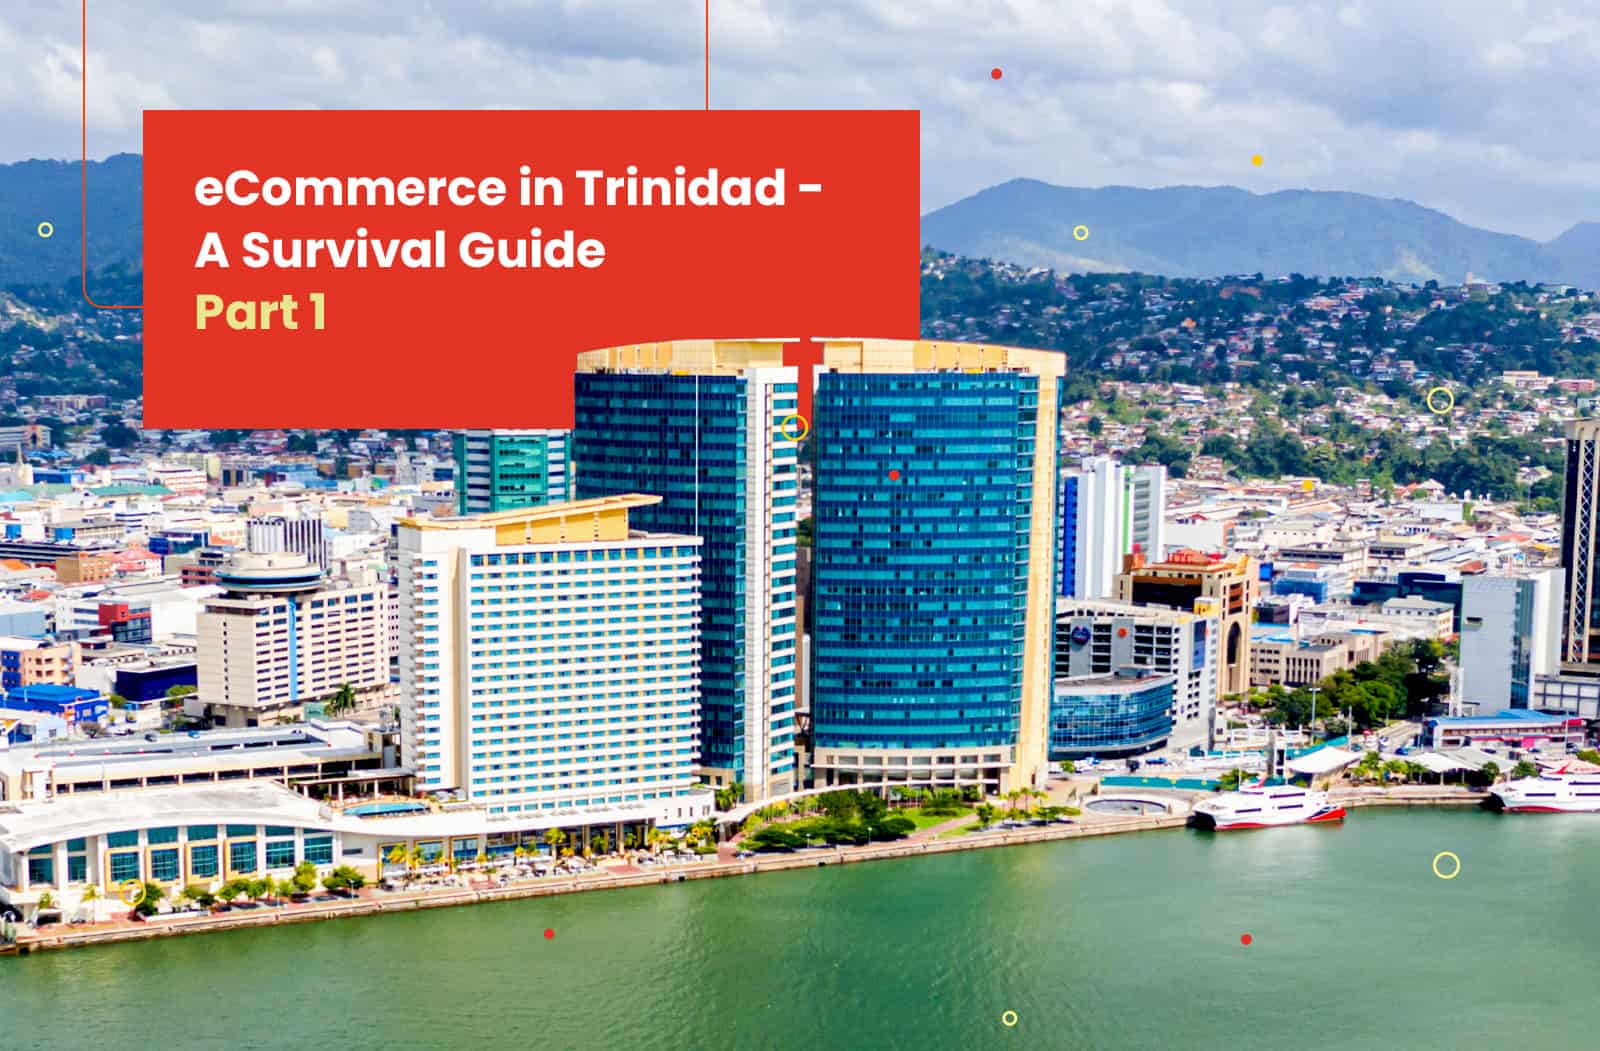 eCommerce in Trinidad - A Survival Guide